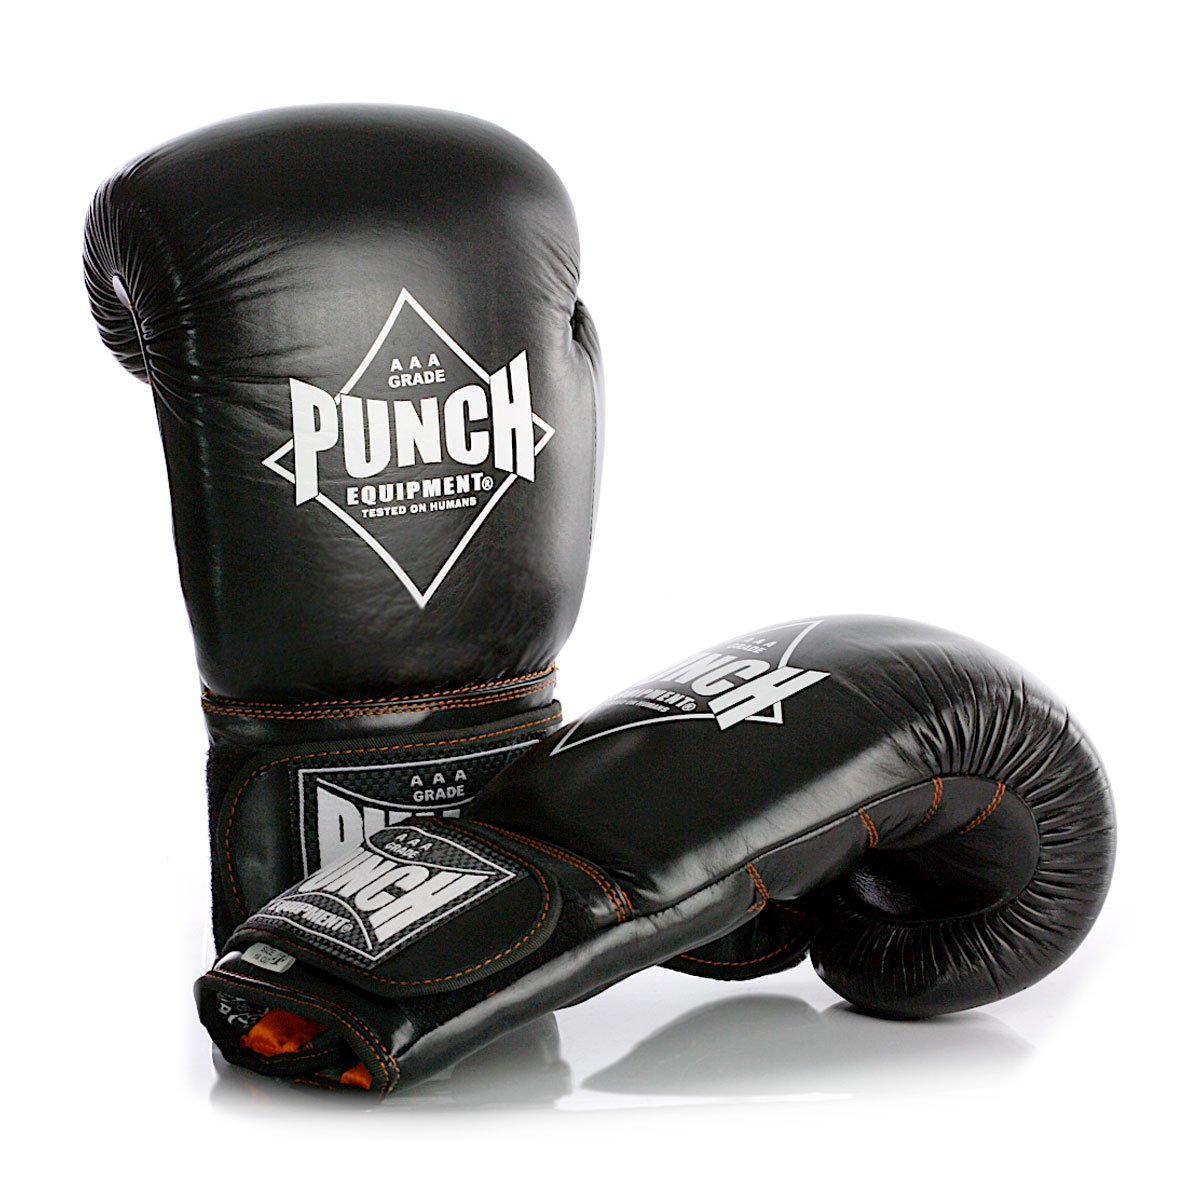 Punch Equipment Black Diamond Muay Thai Boxing Gloves Muay Thai / Boxing Gloves Punch Equipment Tactical Gear Supplier Tactical Distributors Australia